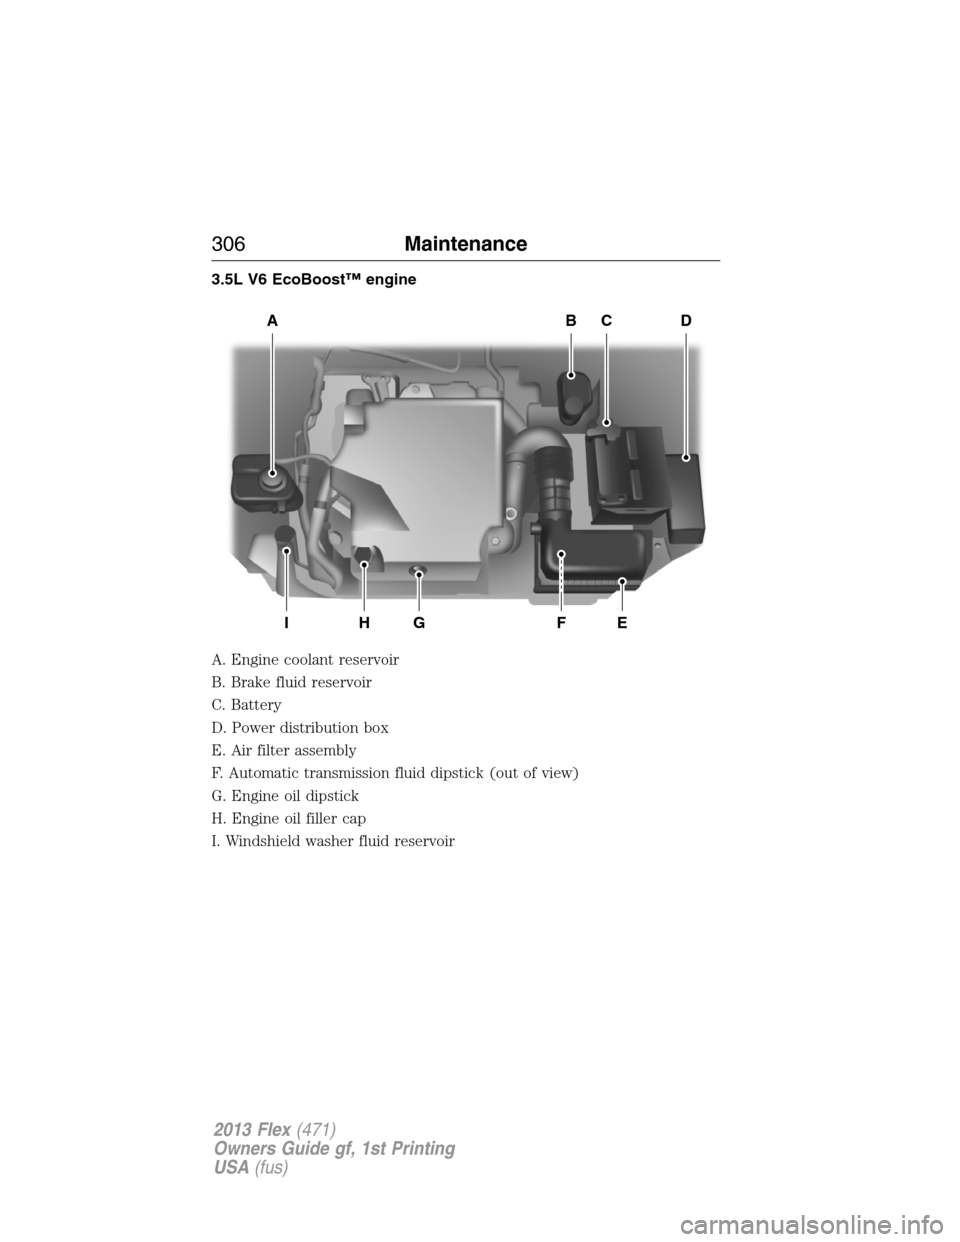 FORD FLEX 2013 1.G Owners Guide 3.5L V6 EcoBoost™ engine
A. Engine coolant reservoir
B. Brake fluid reservoir
C. Battery
D. Power distribution box
E. Air filter assembly
F. Automatic transmission fluid dipstick (out of view)
G. En